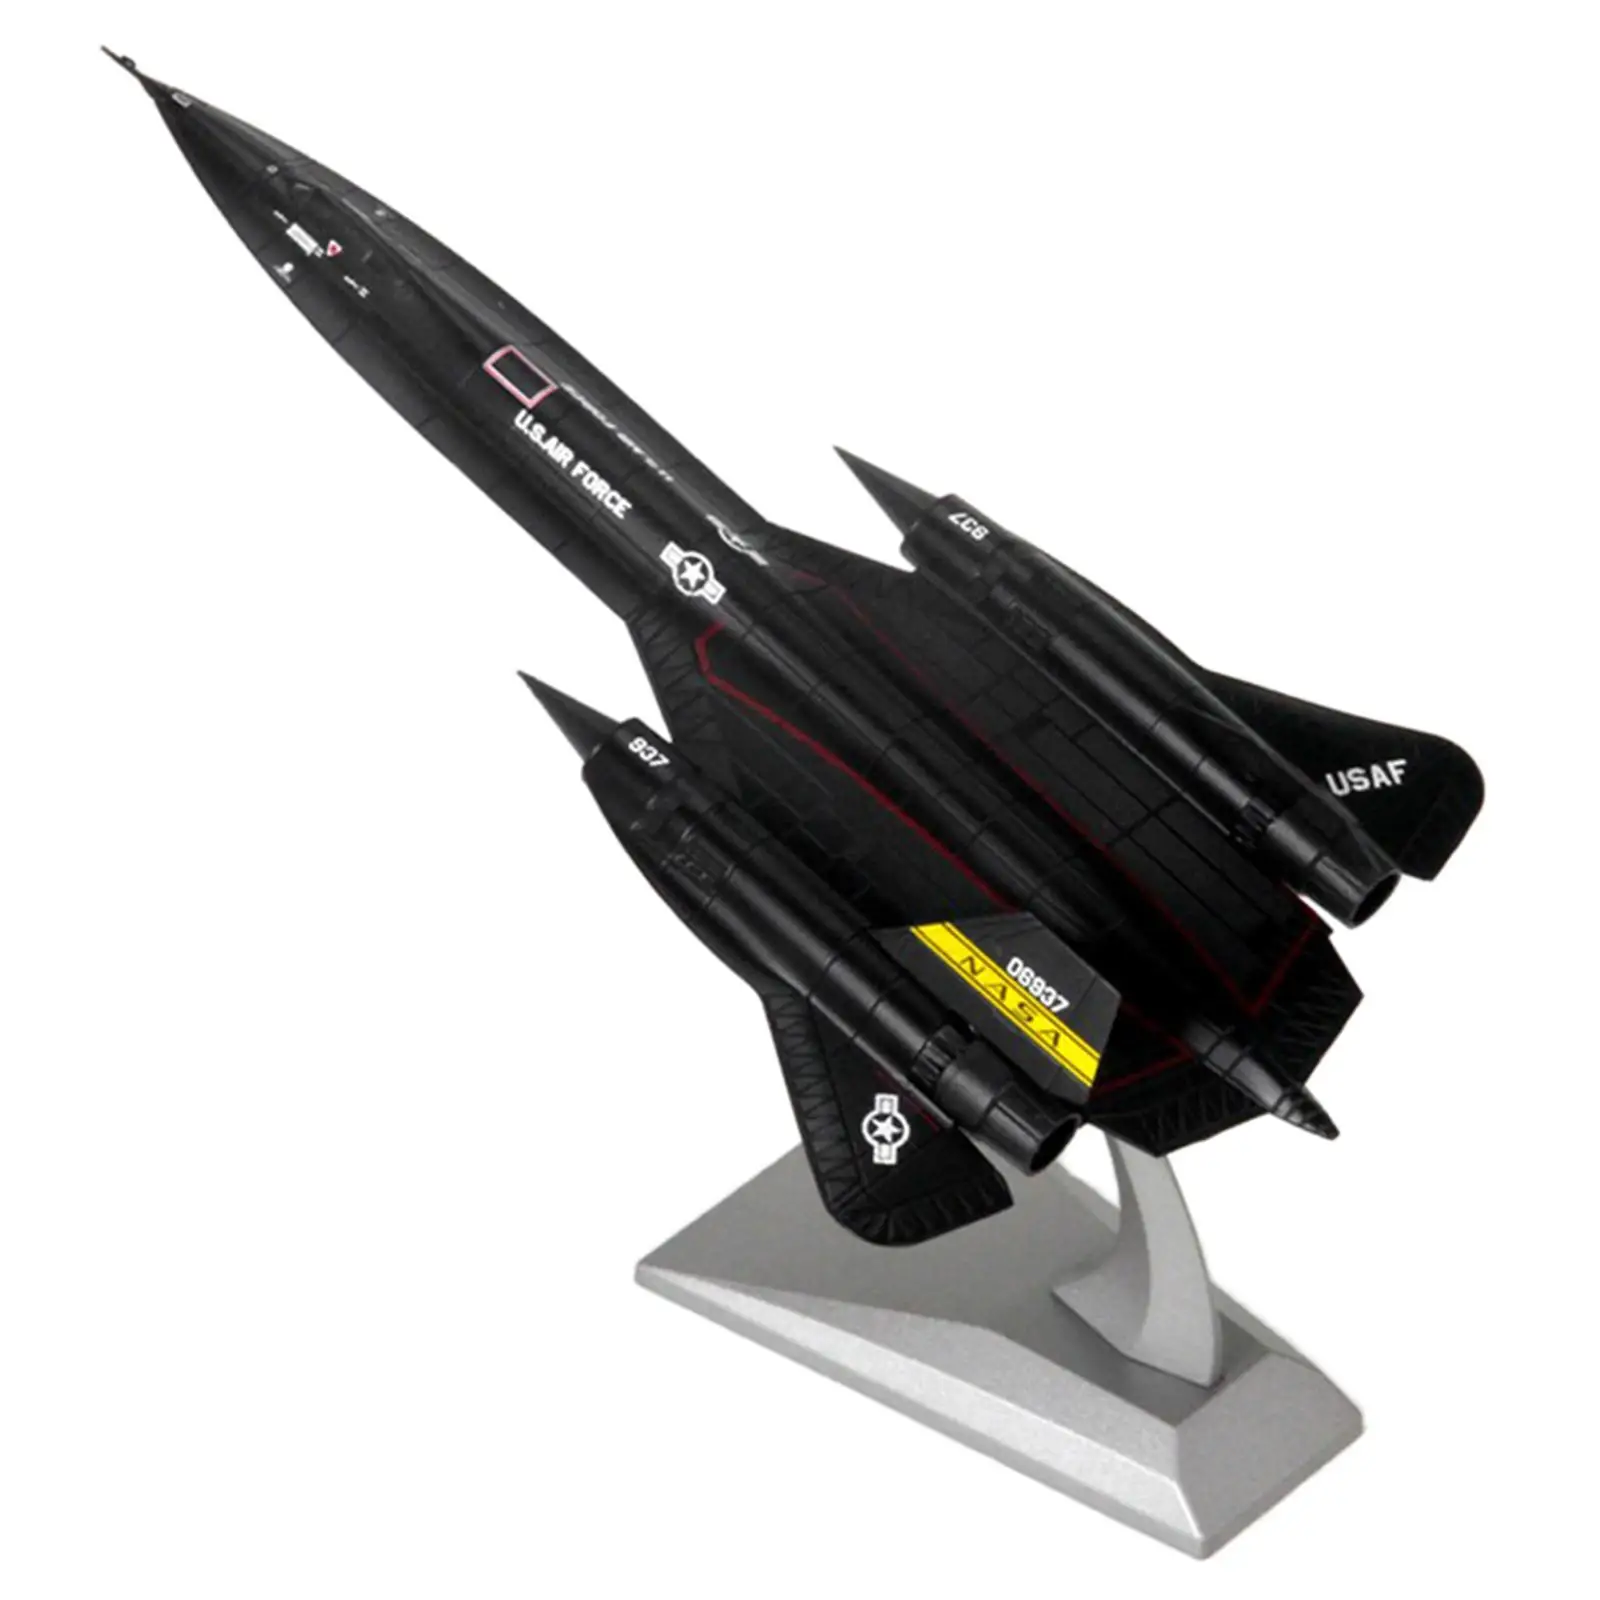 1:144 Scale SR-71A Blackbird Reconnaissance Plane - Simulation Diecast Model with Stand